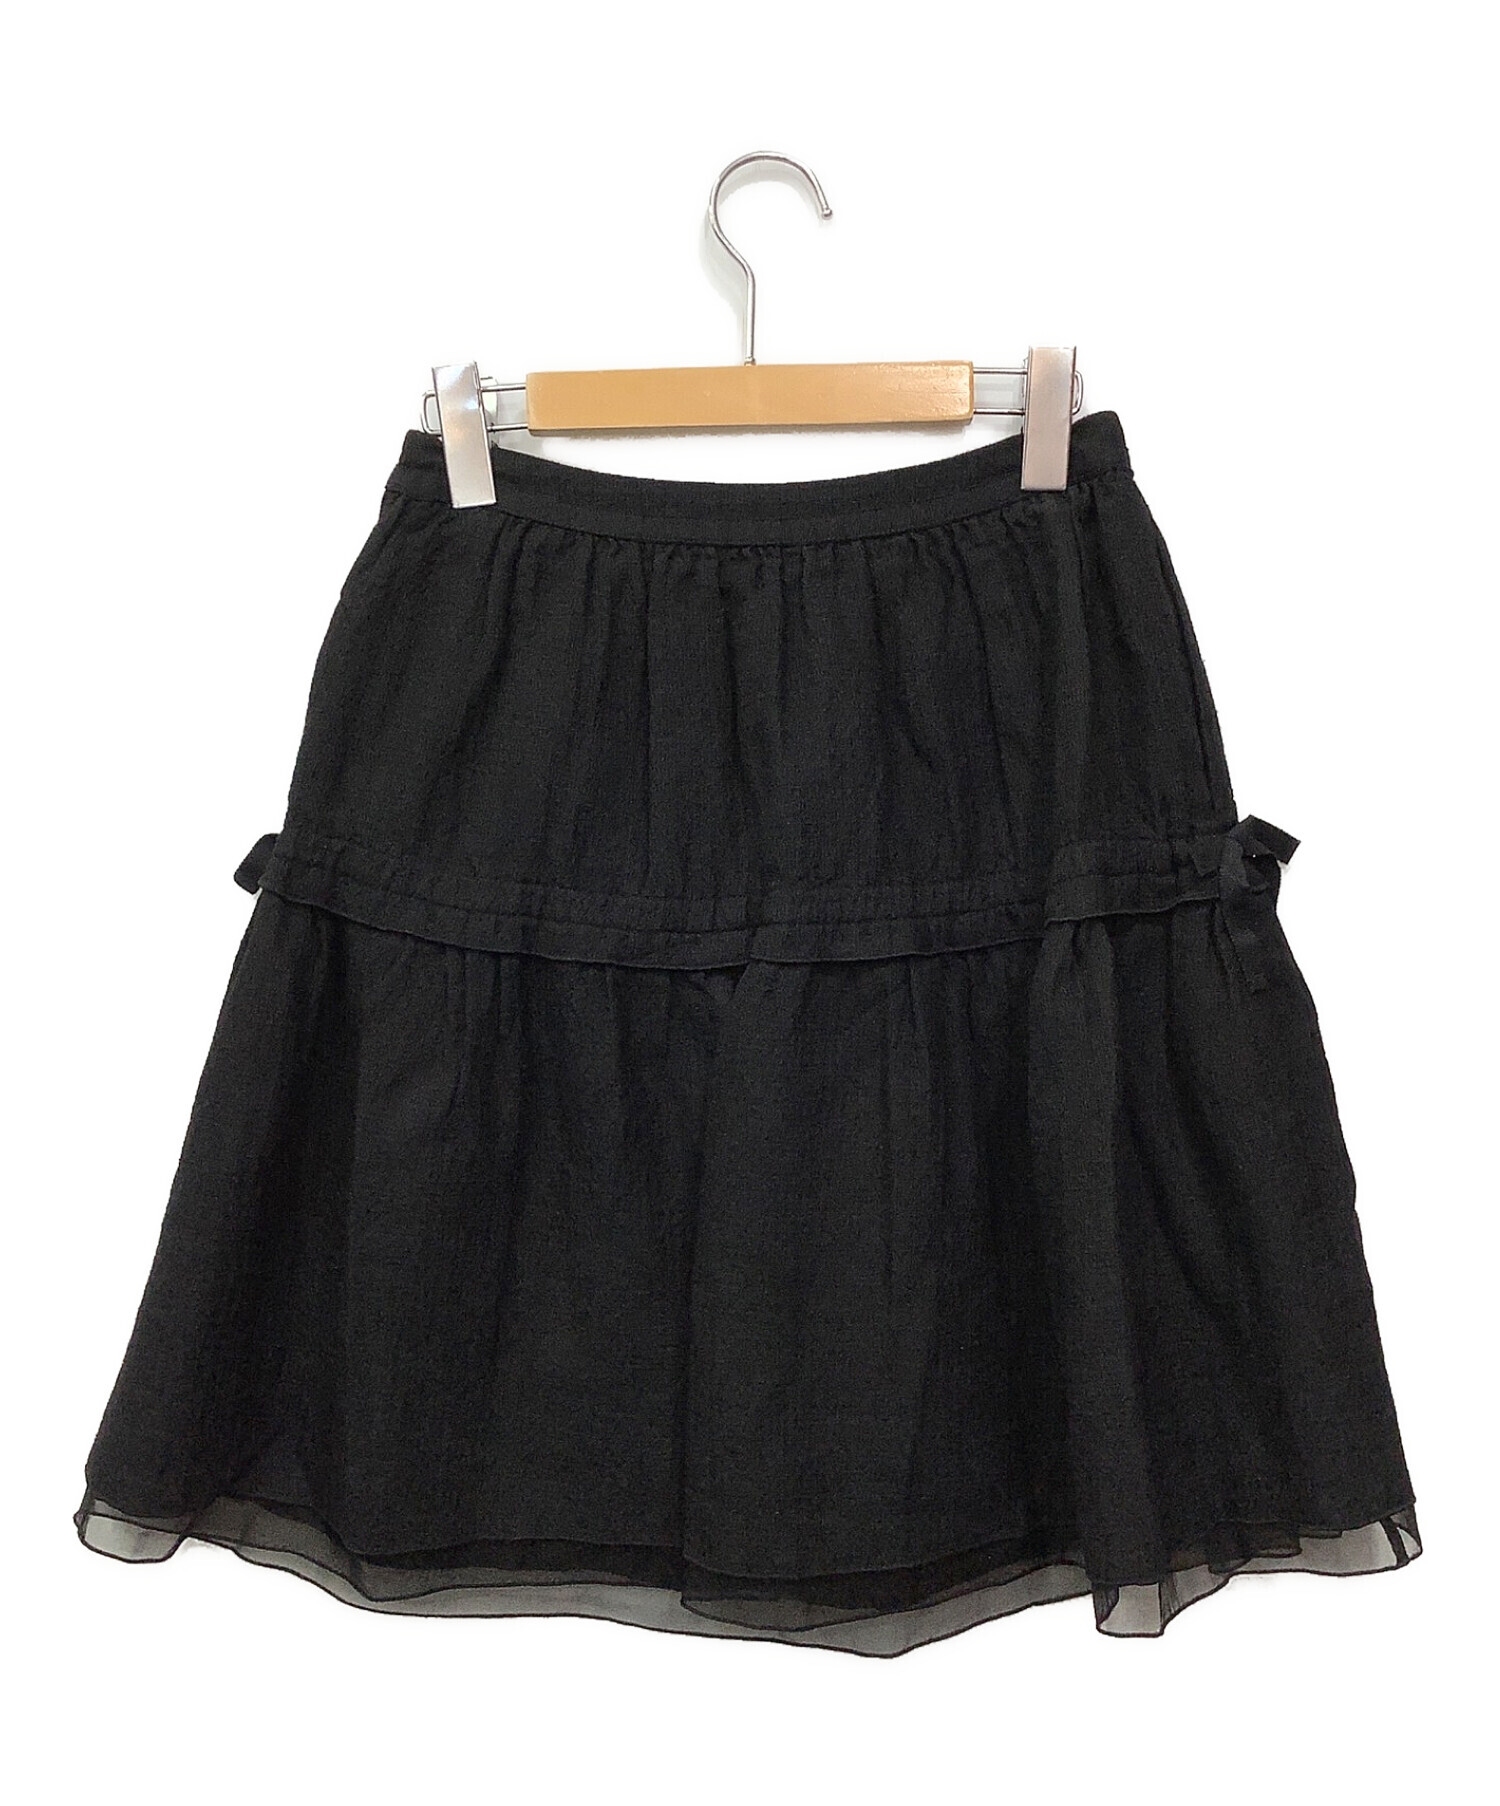 FOXEY 黒シルクスカート新品未使用品 - スカート